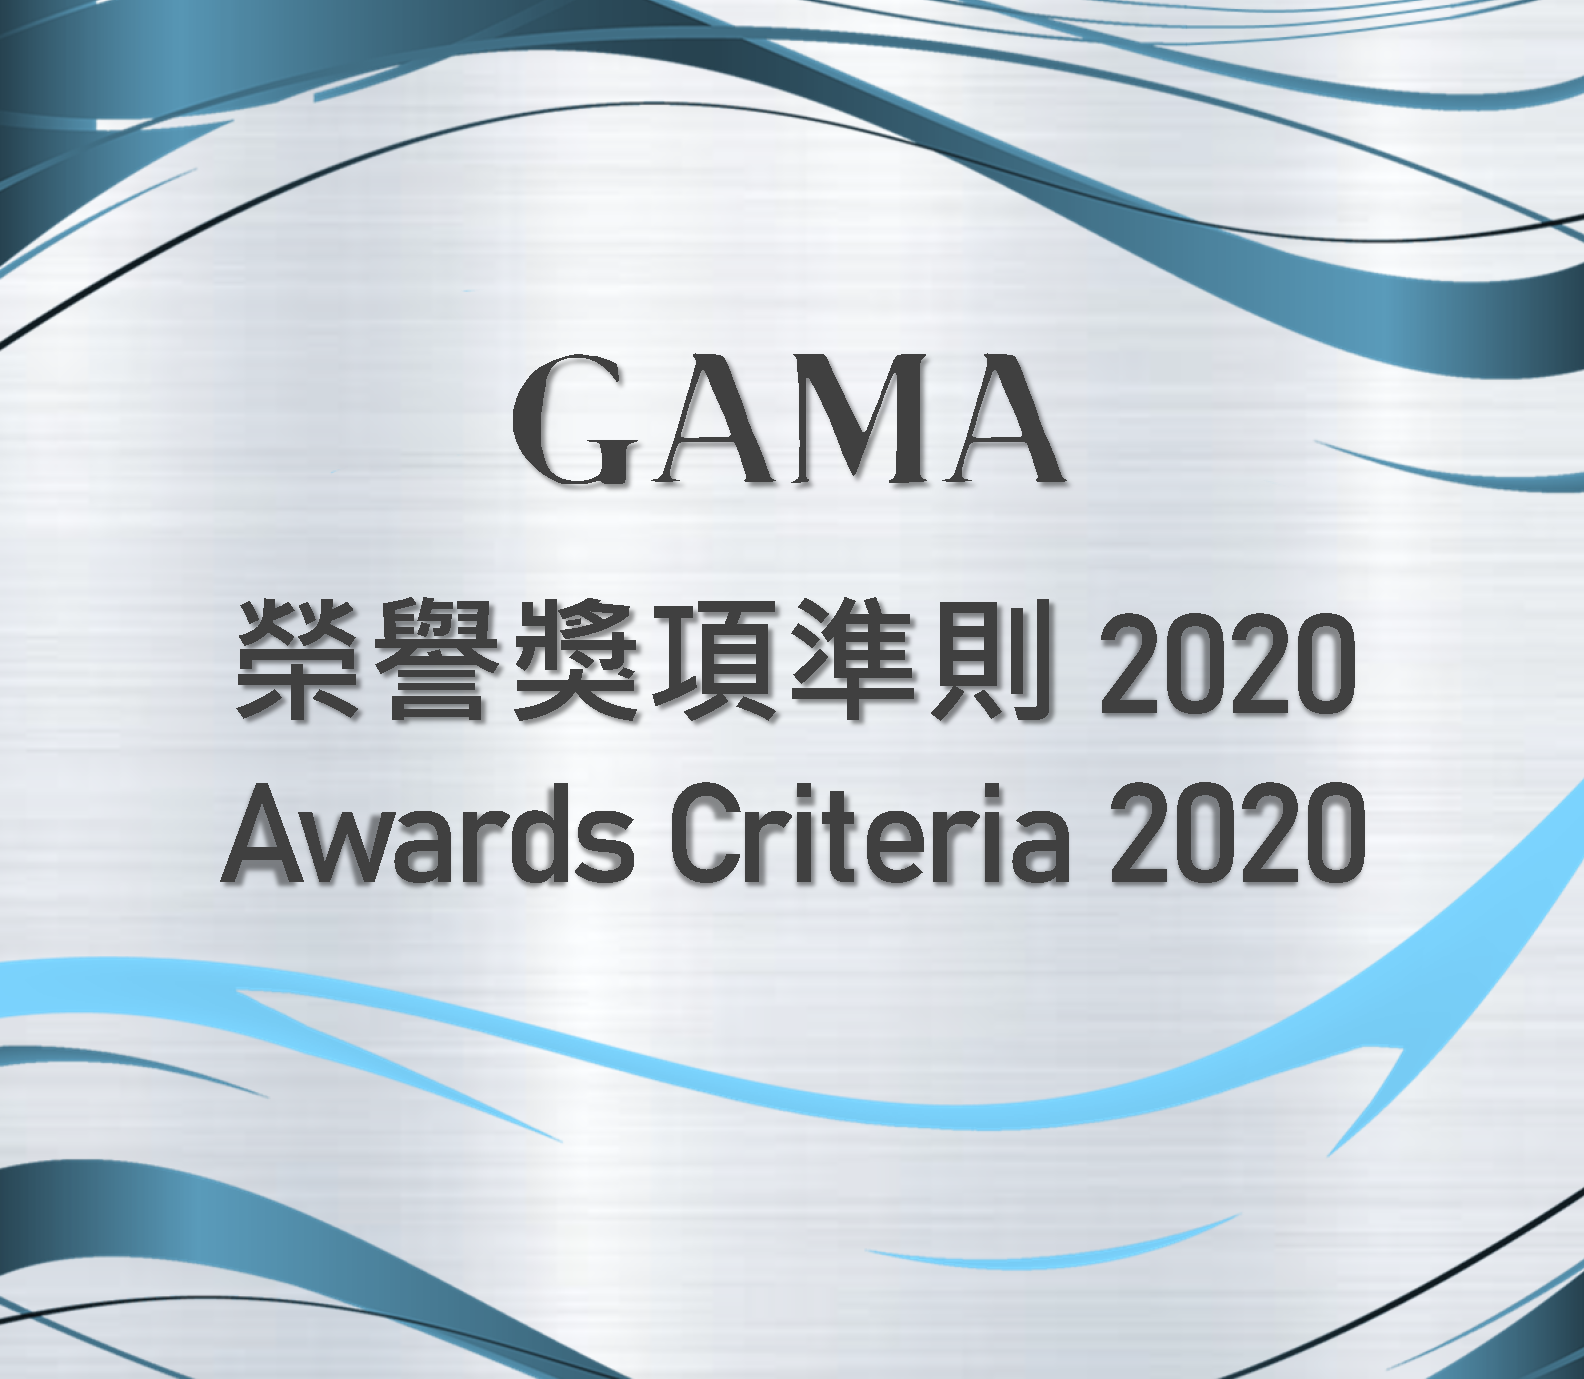 GAMA Awards Criteria 2020 (20191028)